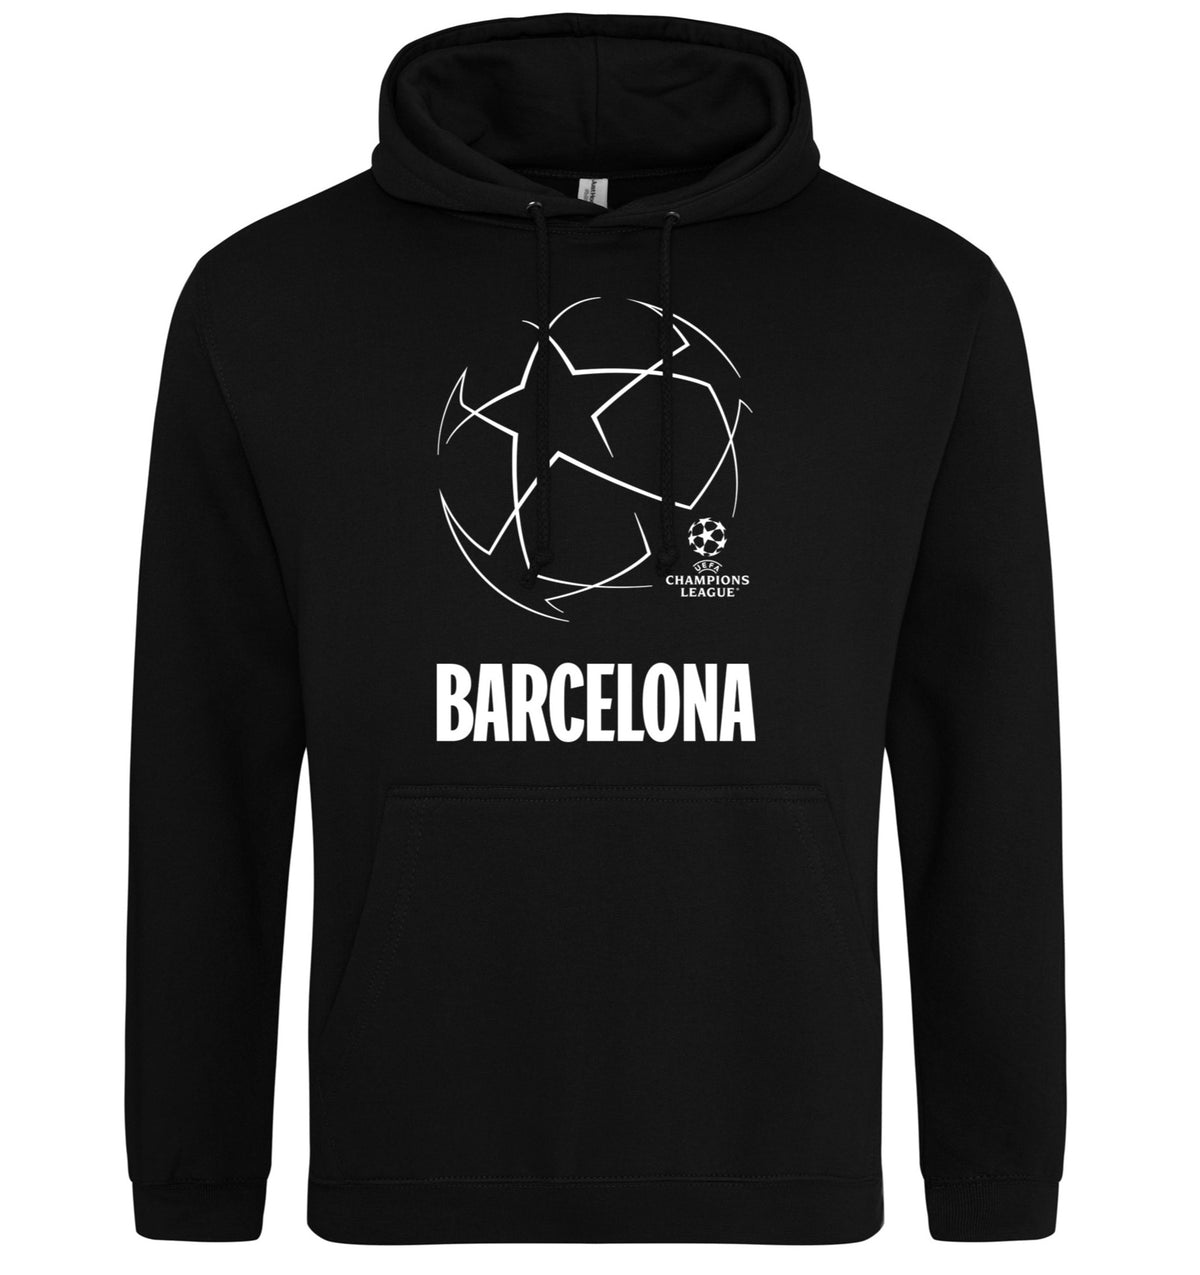 Champions League Starball Barcelona City Hoodie Black